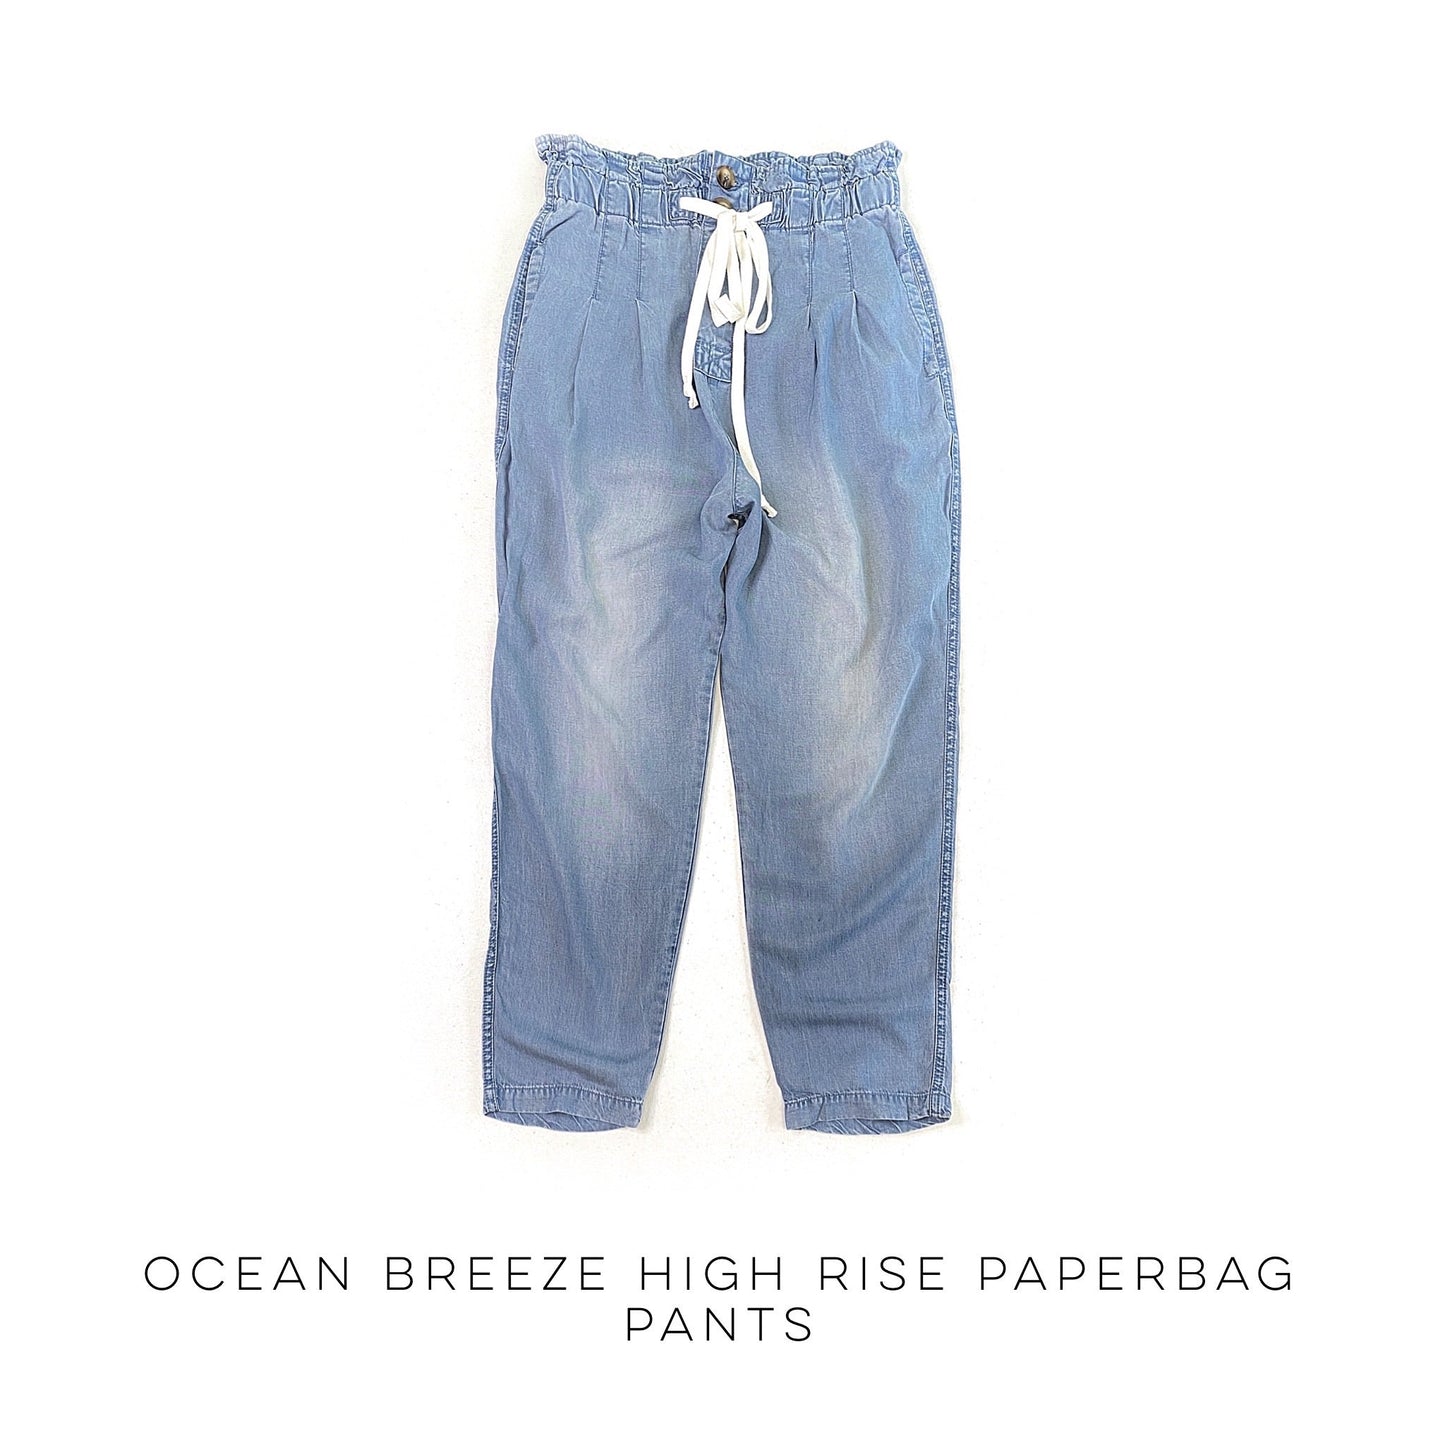 Ocean Breeze High Rise Paperbag Pants